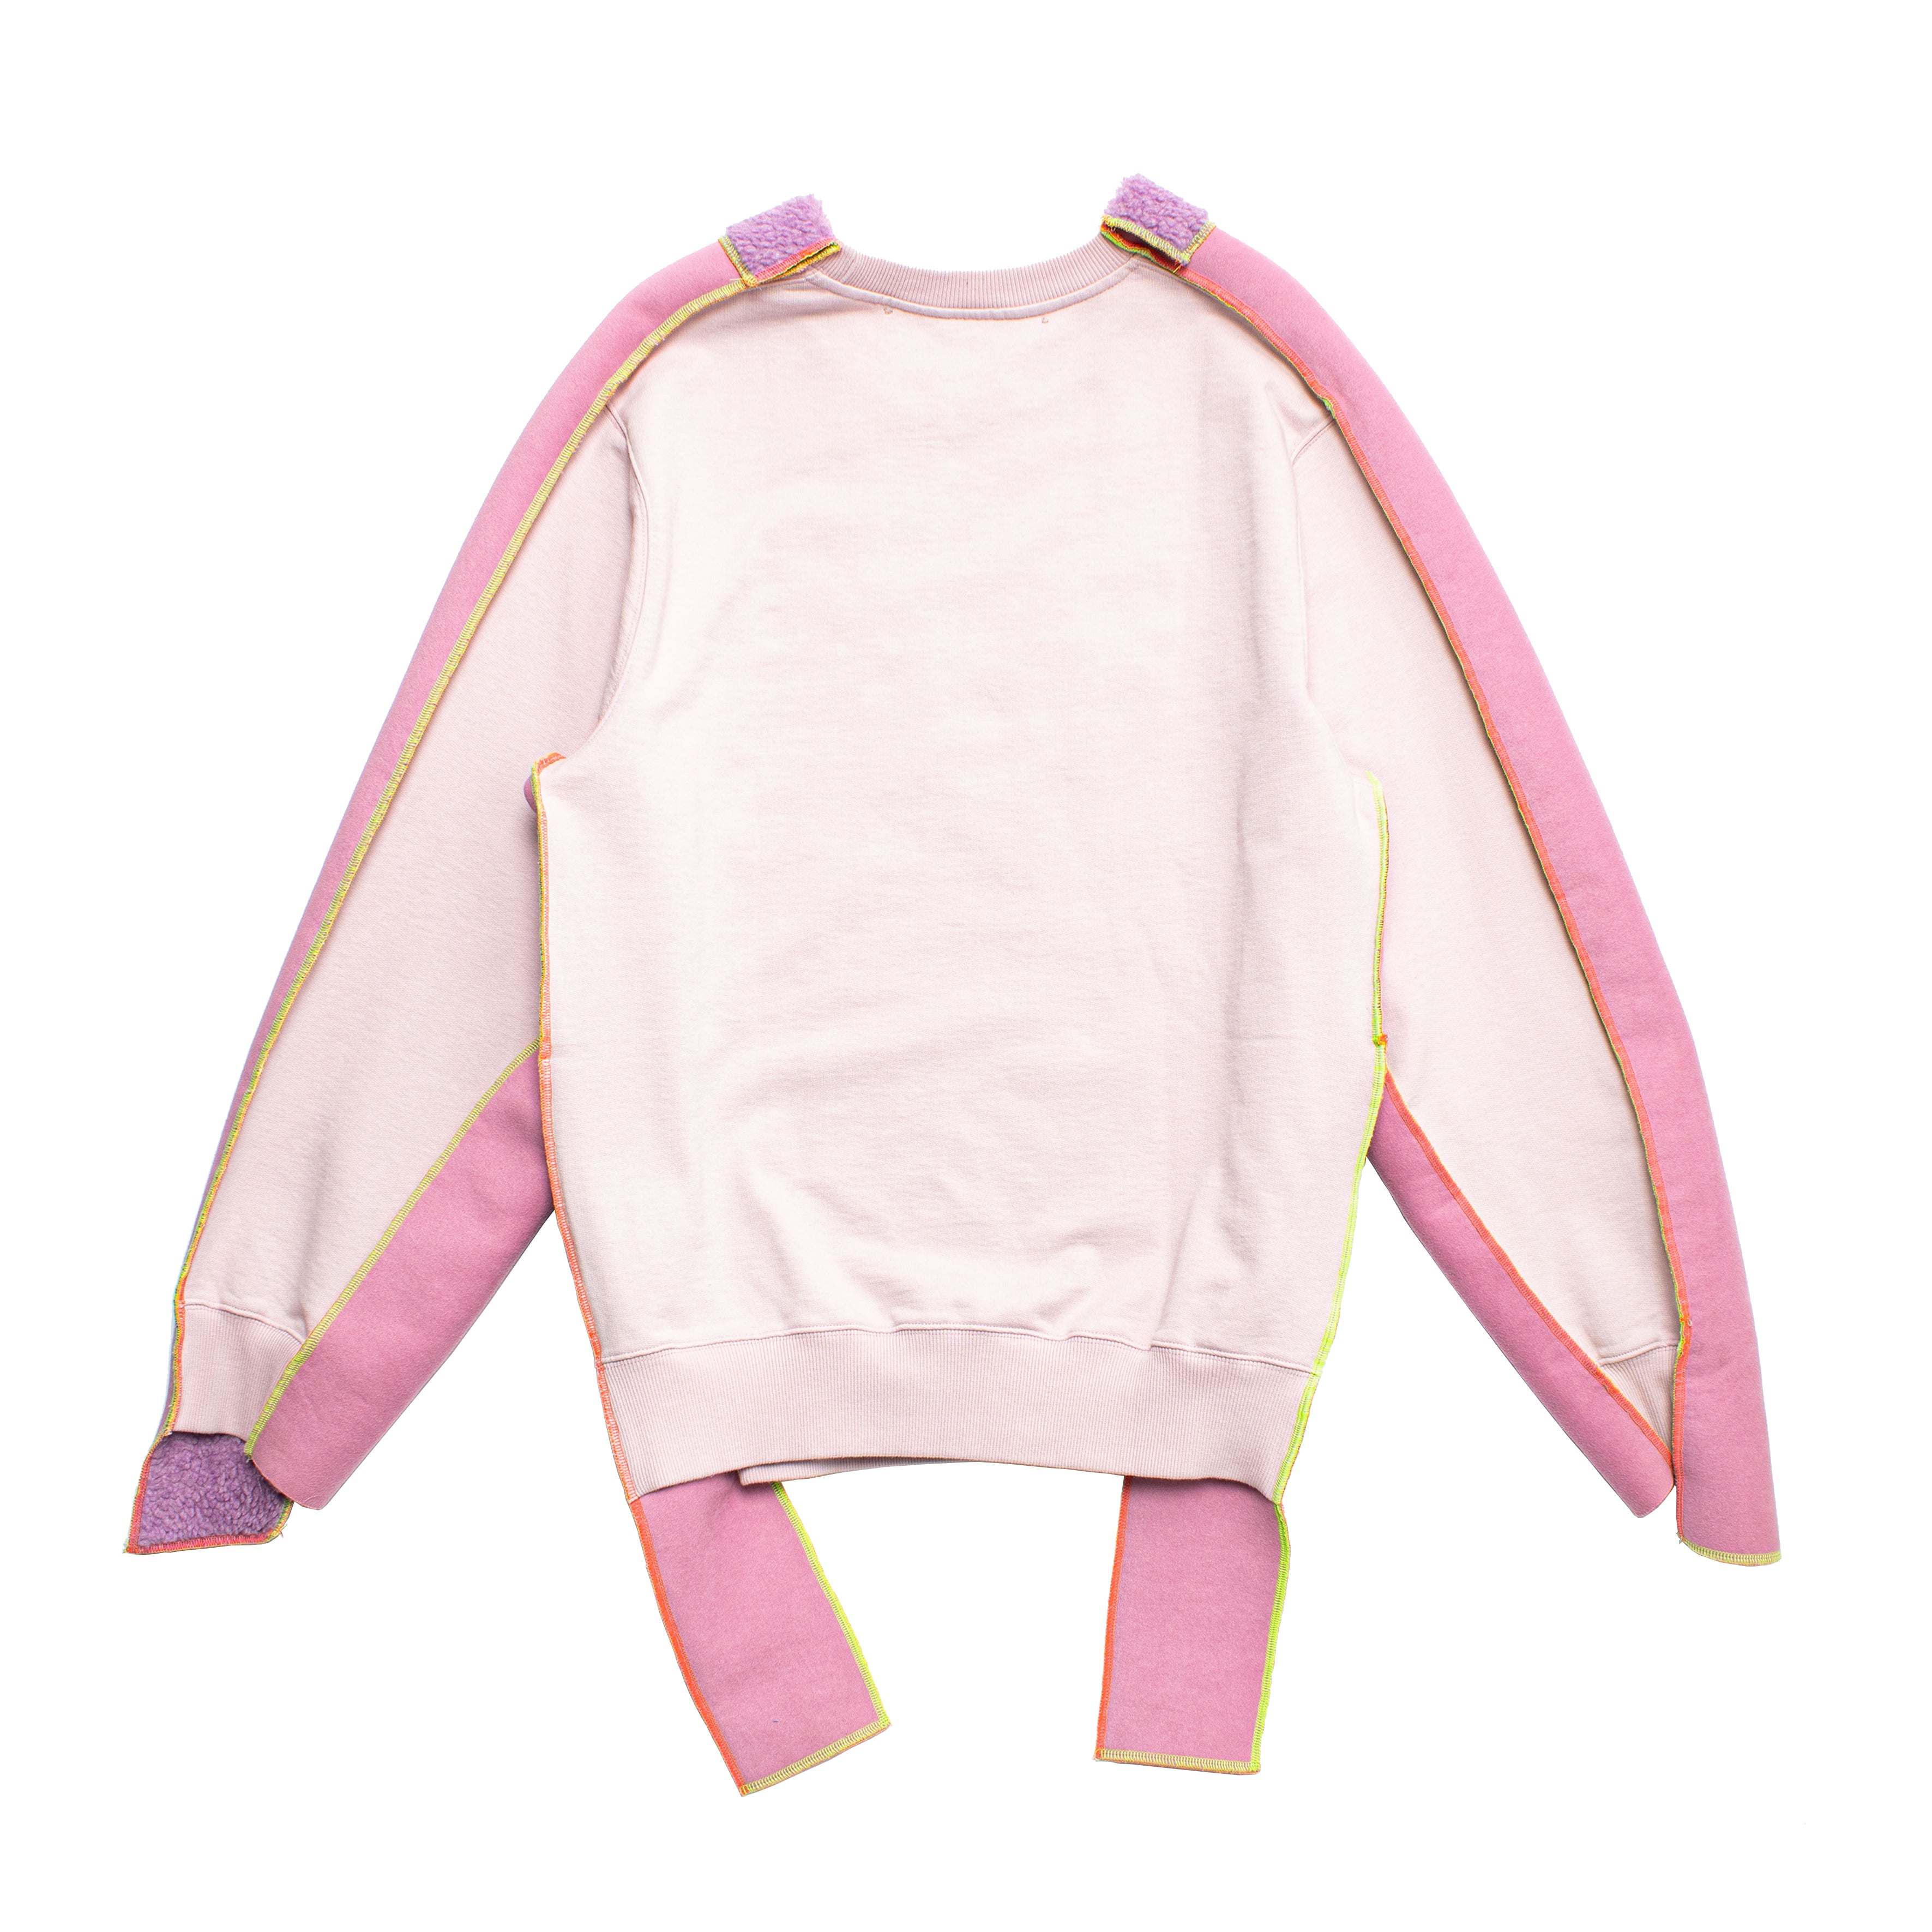 FREAKDREAM Pink Sweatshirt x 2